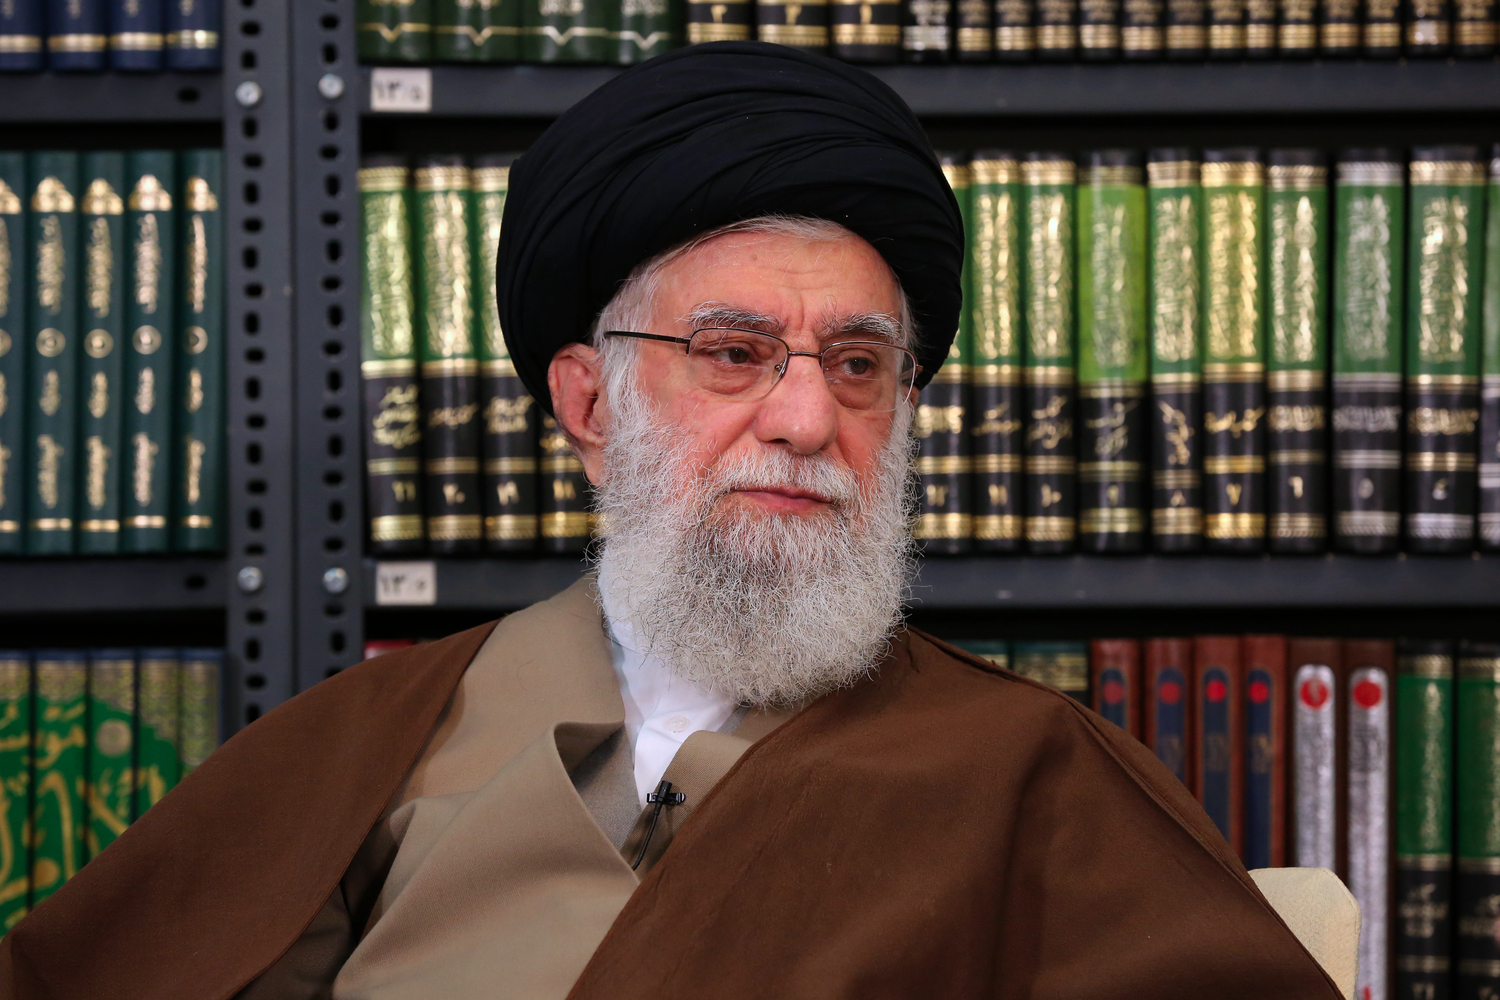 http://idc0-cdn0.khamenei.ir/ndata/news/45034/B/13981208_0145034.jpg